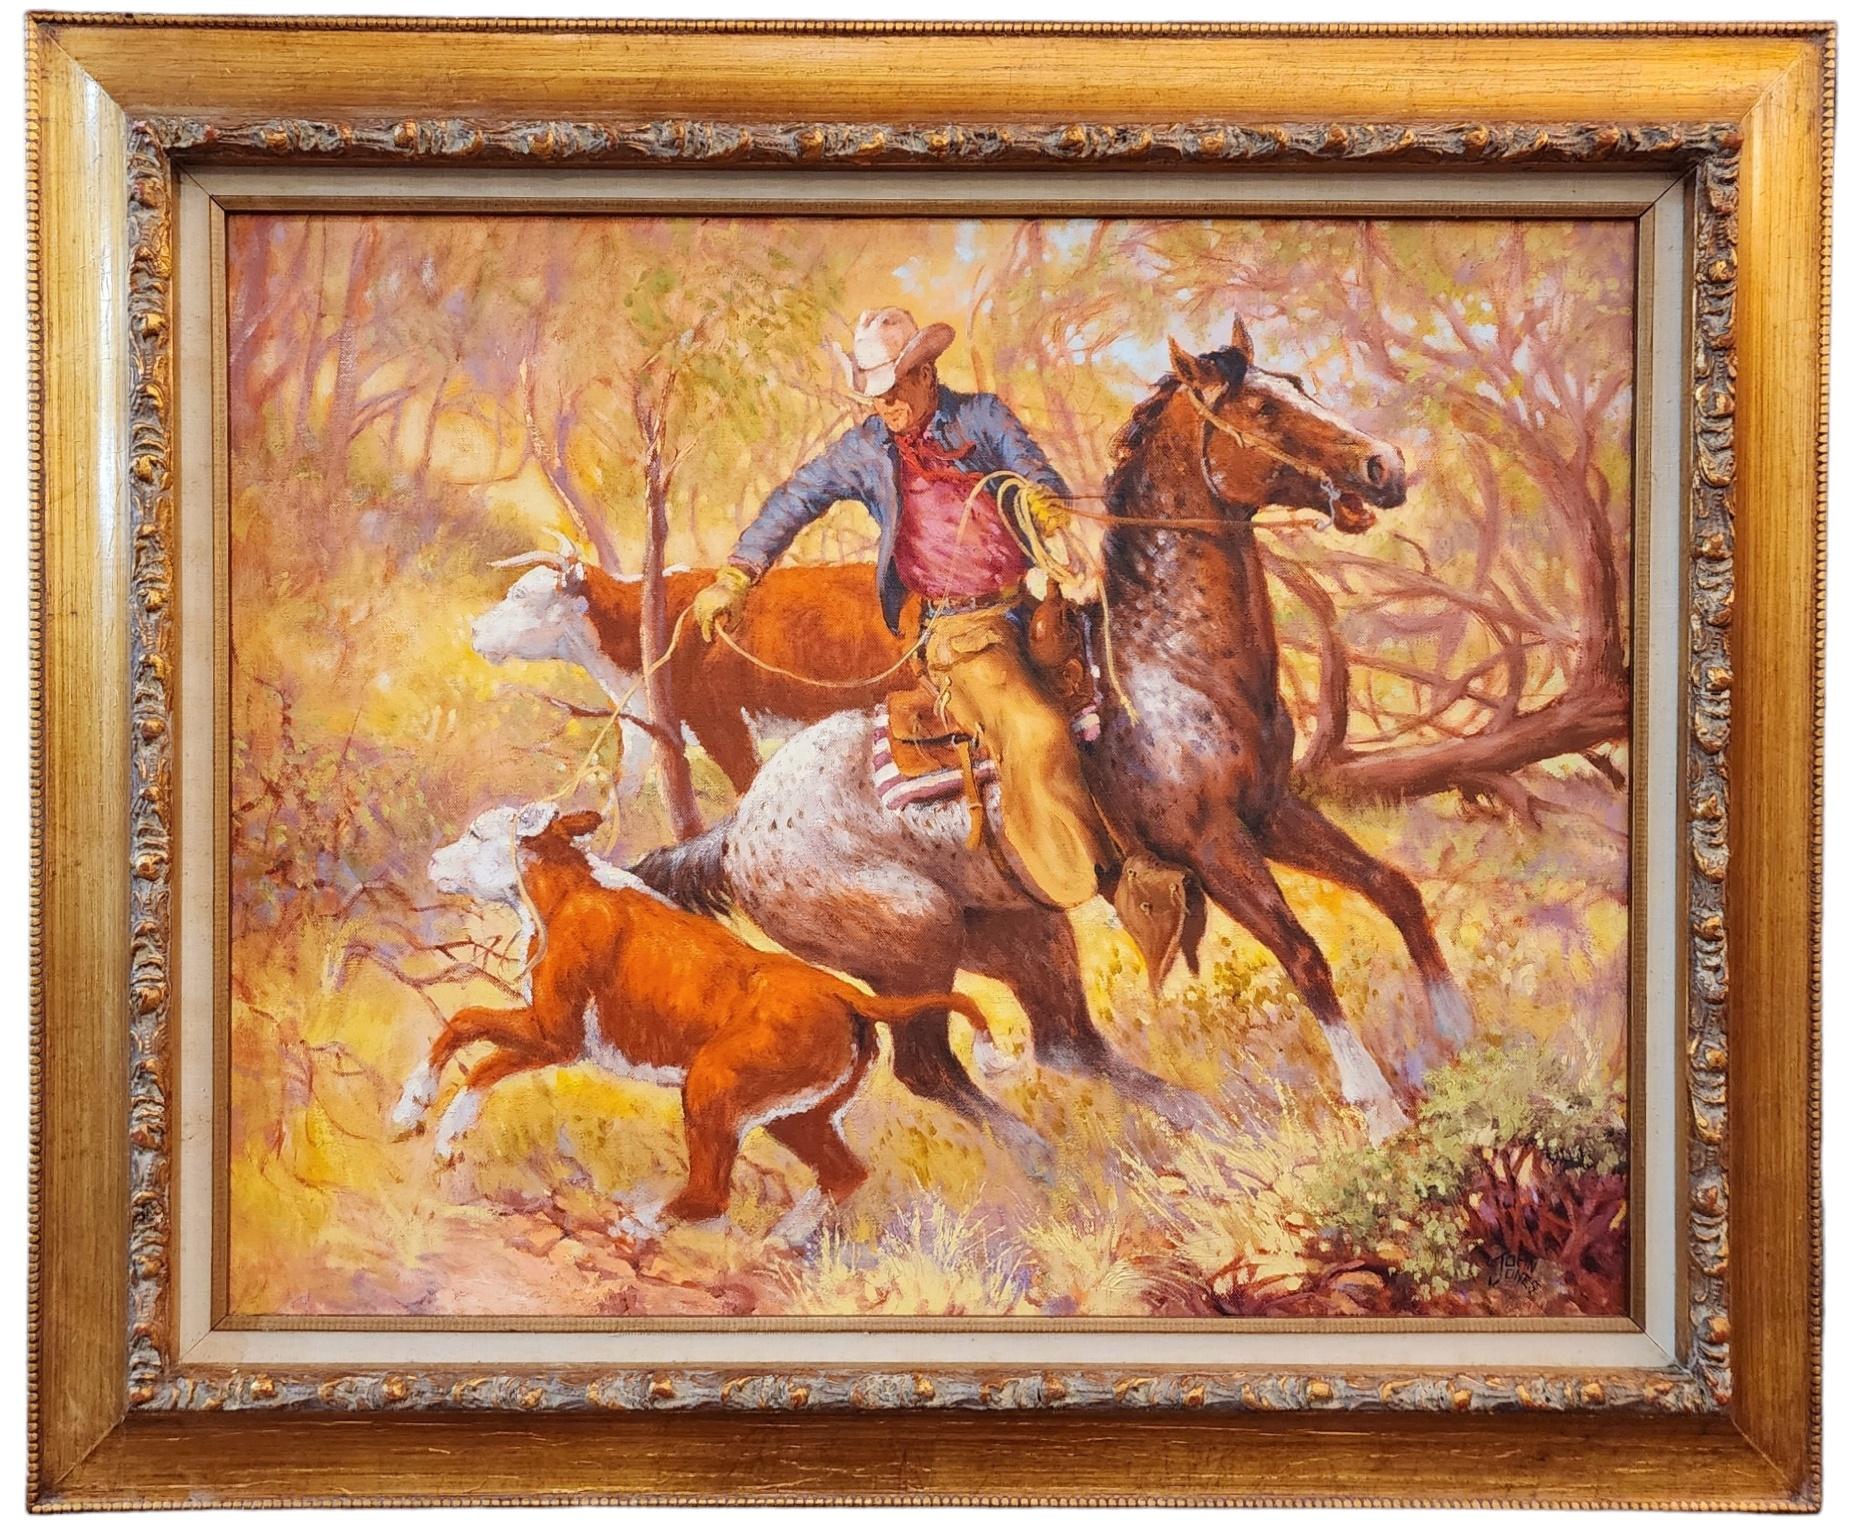 John Jones Animal Painting - The Capture, Cowboy, Herding Cattle, Vintage Western Art, Horse, Lassoing Cows